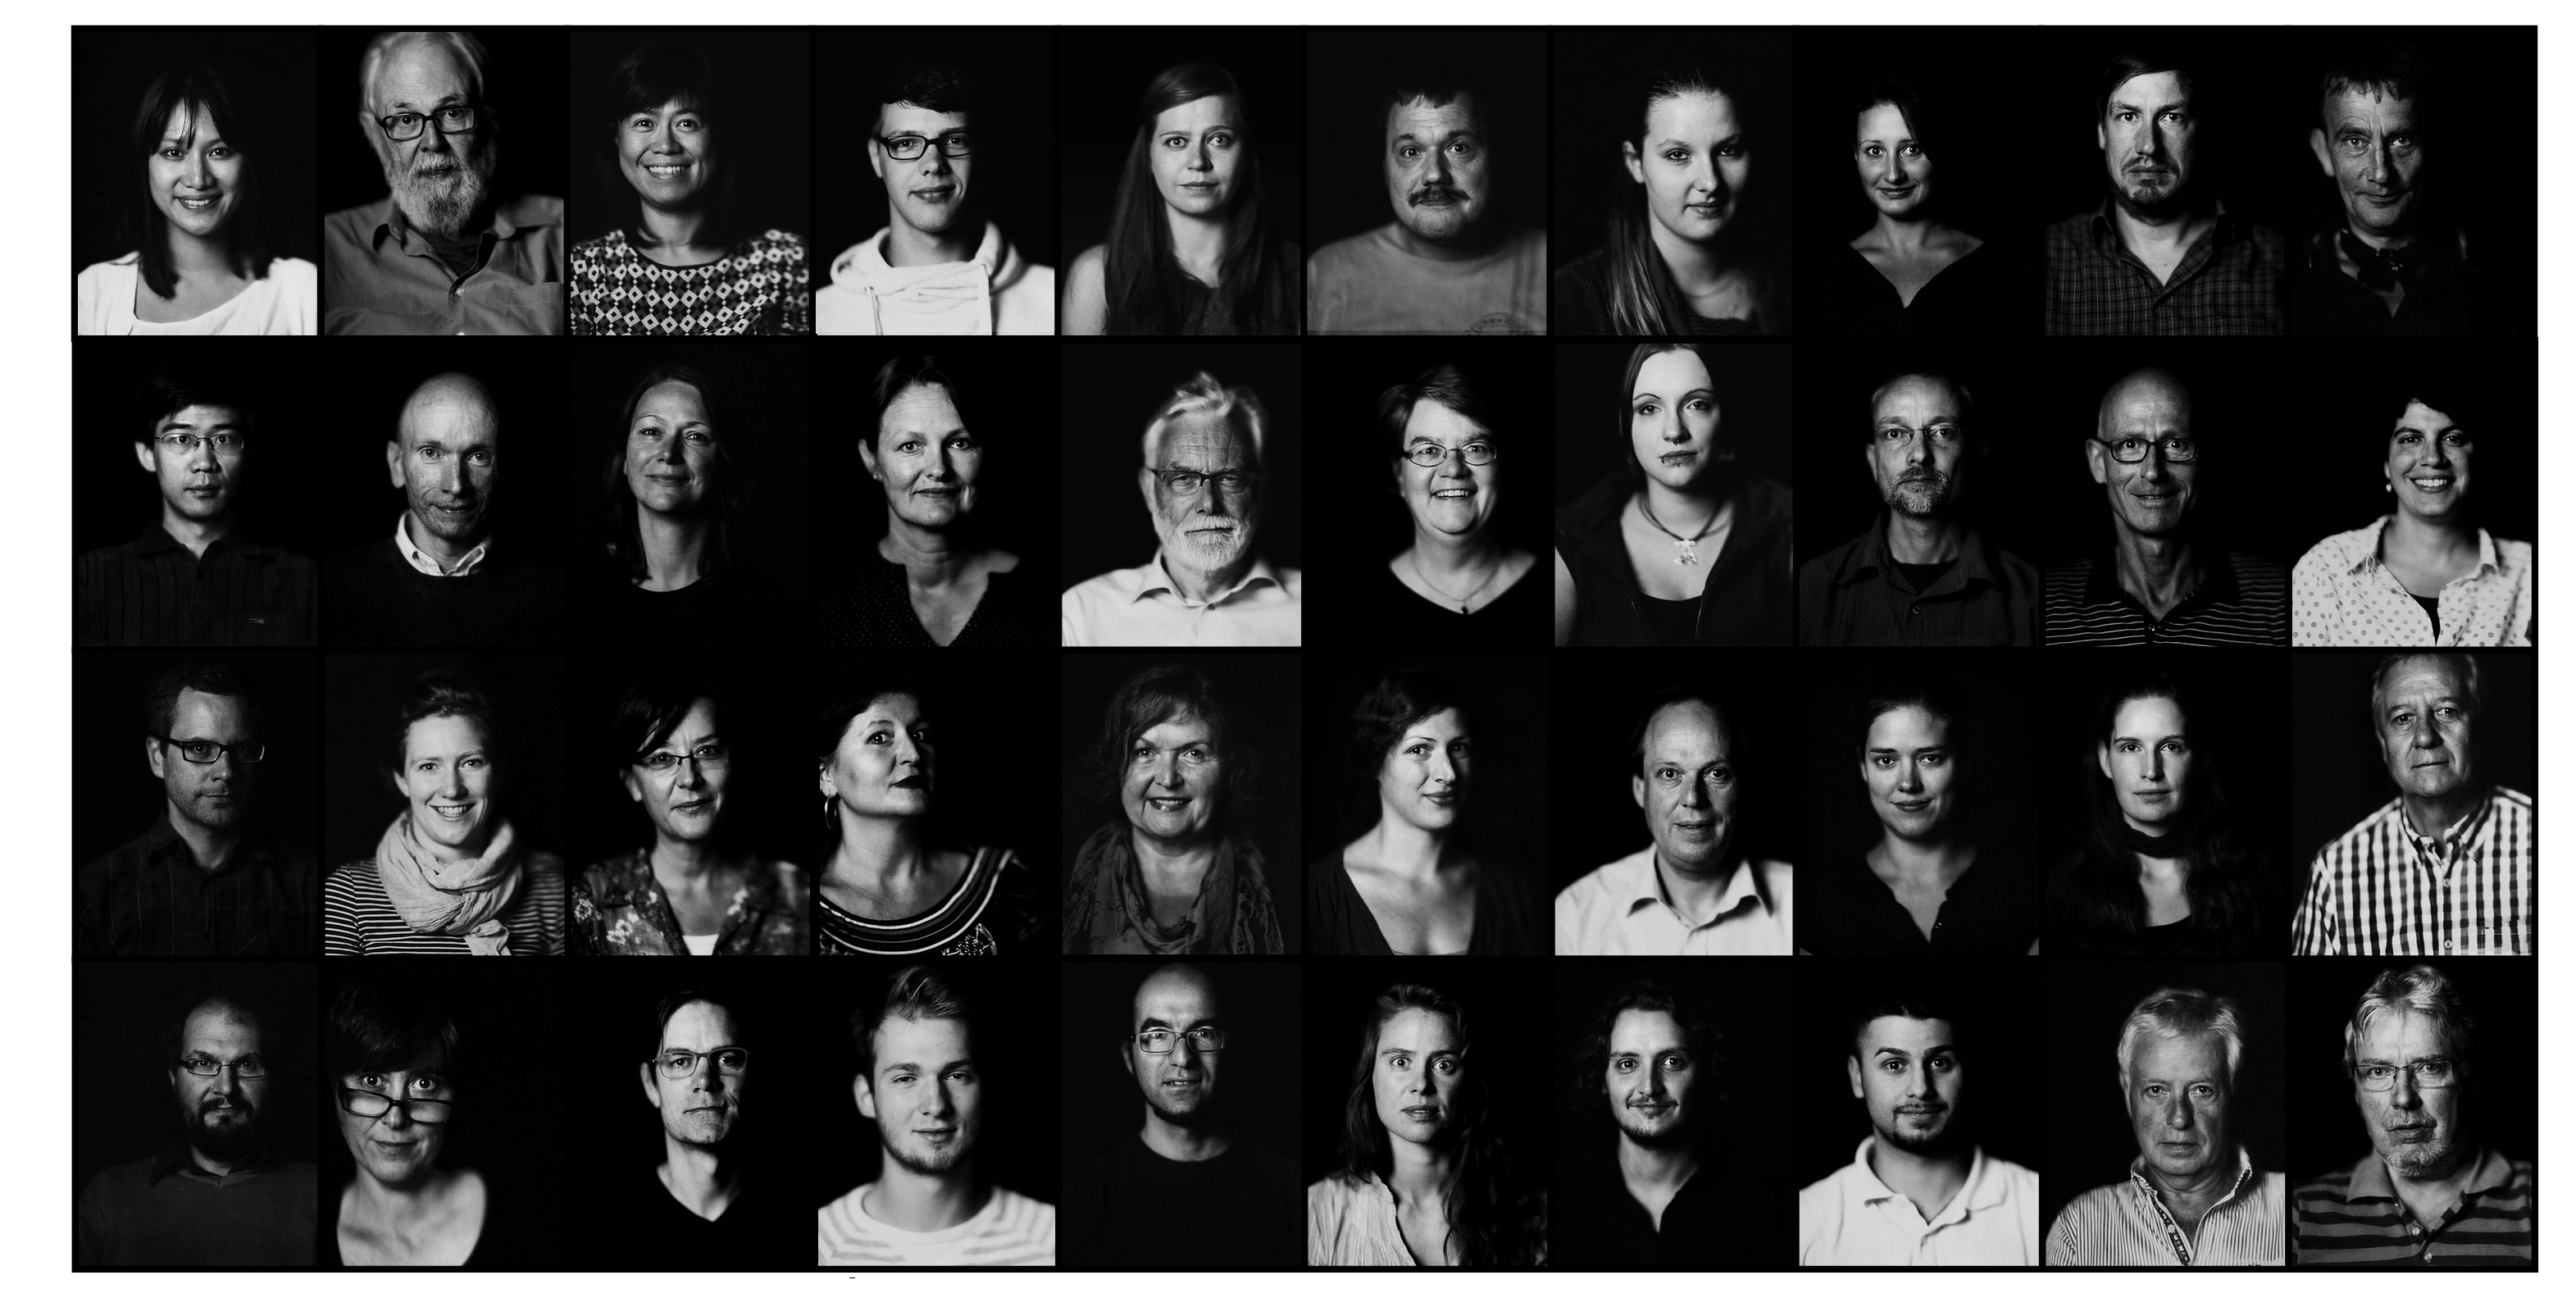 Montserrat de Pablo. Camera Obscura Portraits, 2014. Direct positive gelatin prints.